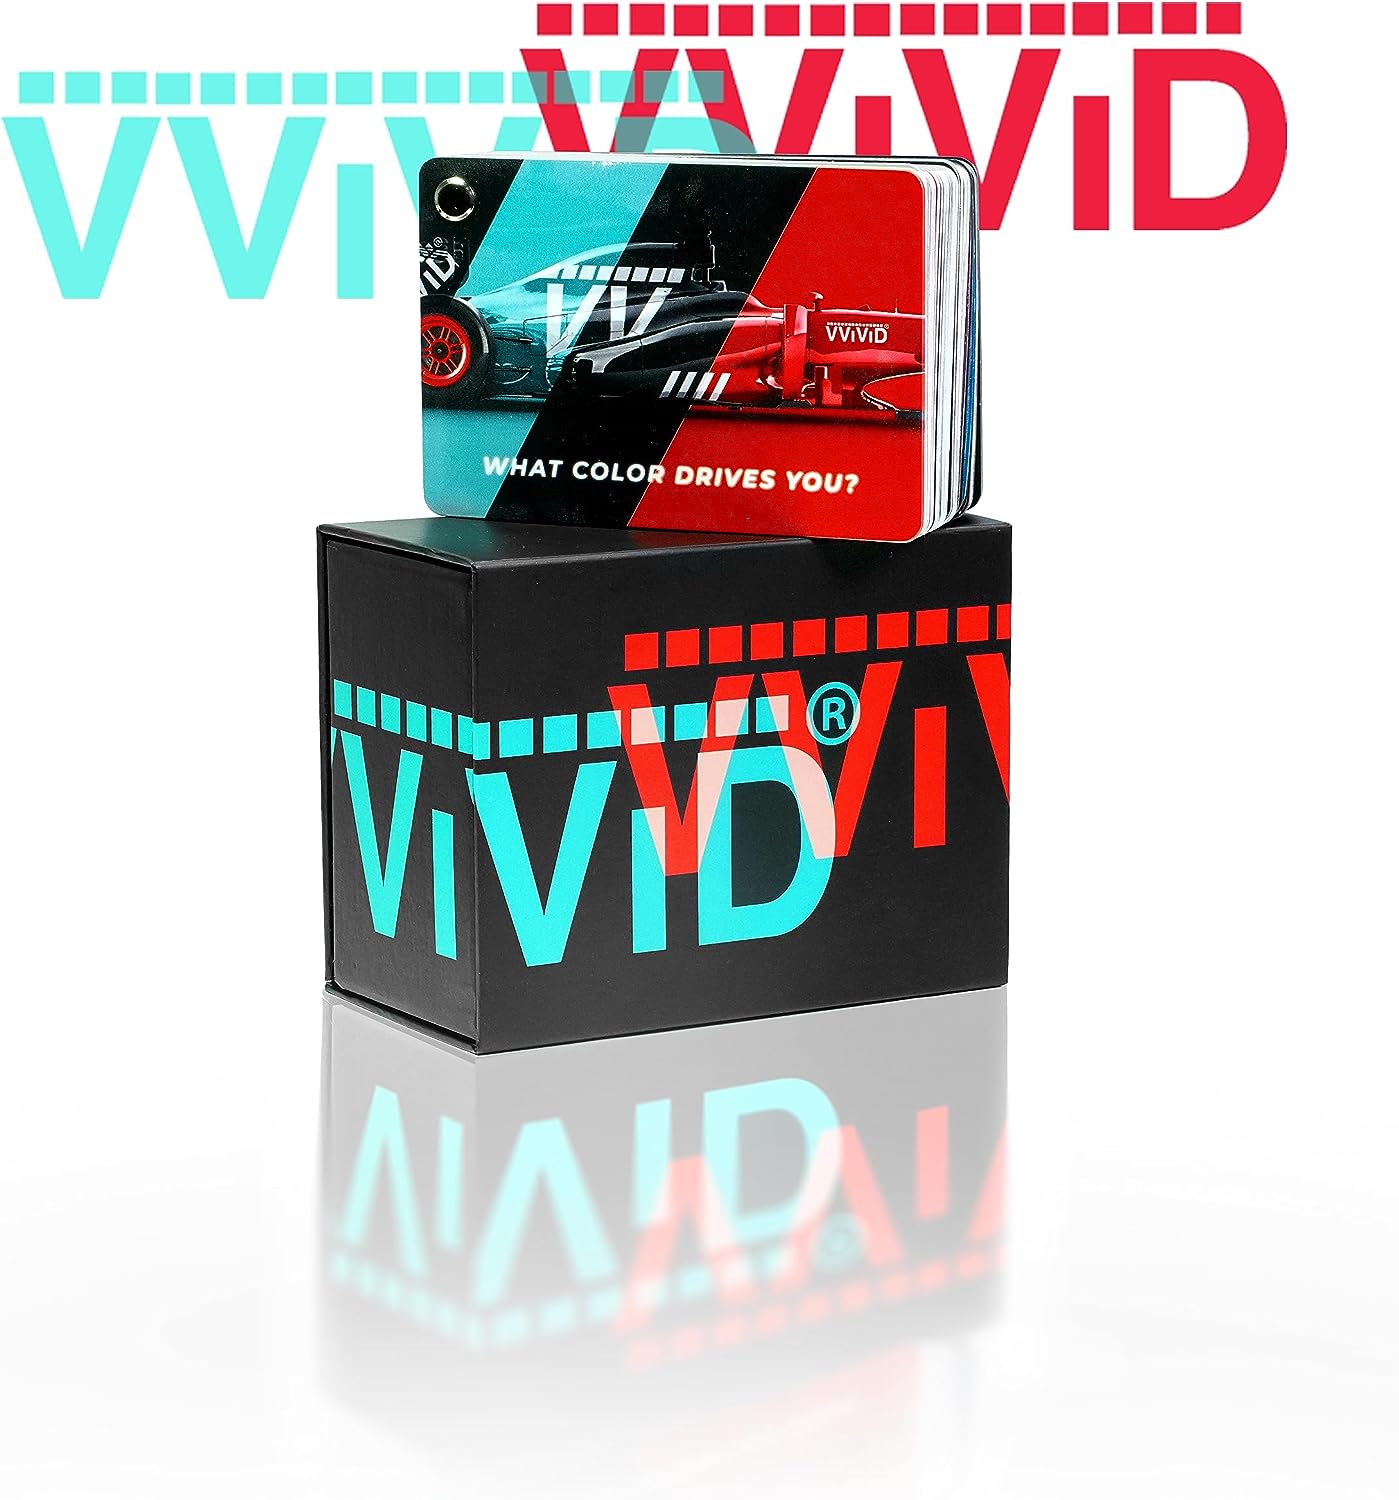 VVIVID Detailer Vinyl Wrap Tool Kit (MCF)